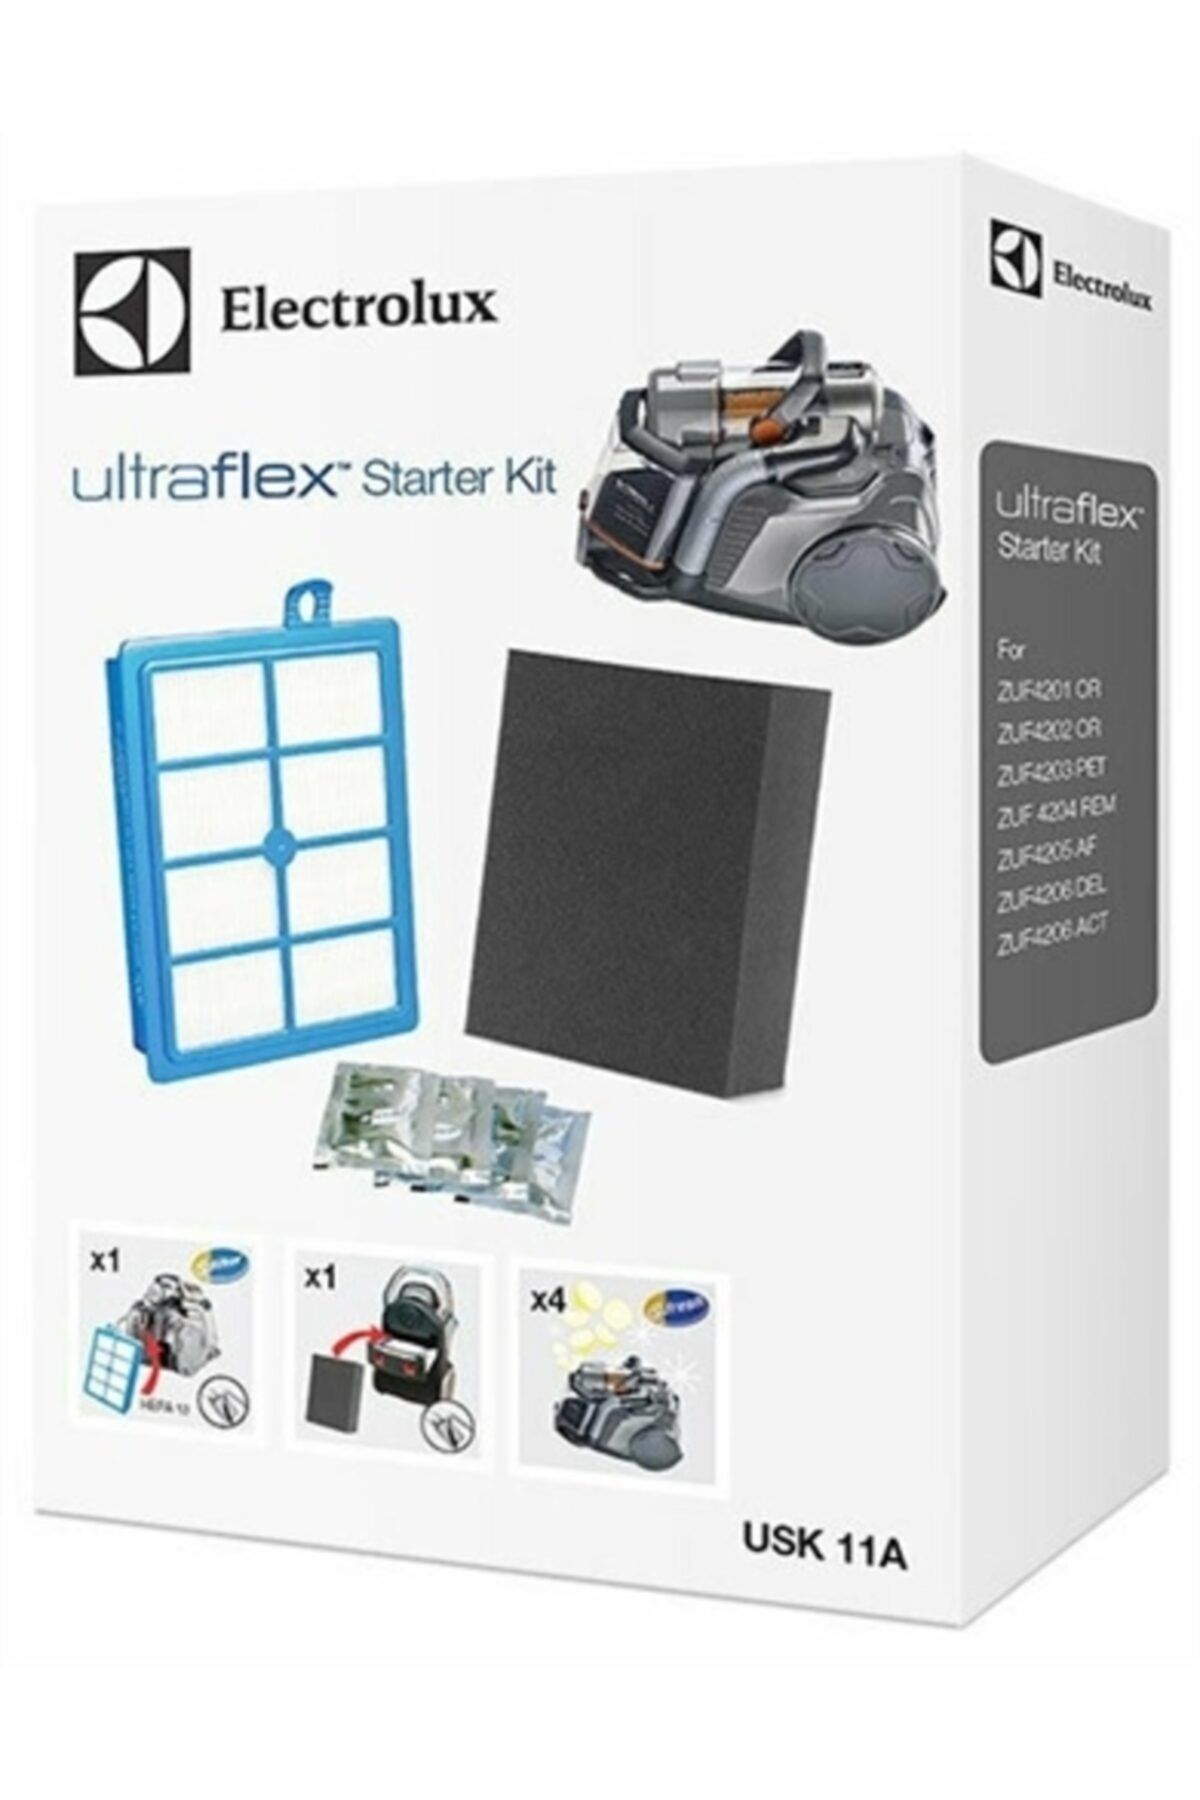 Electrolux Zuf4201or Ultraflex Performance Kit